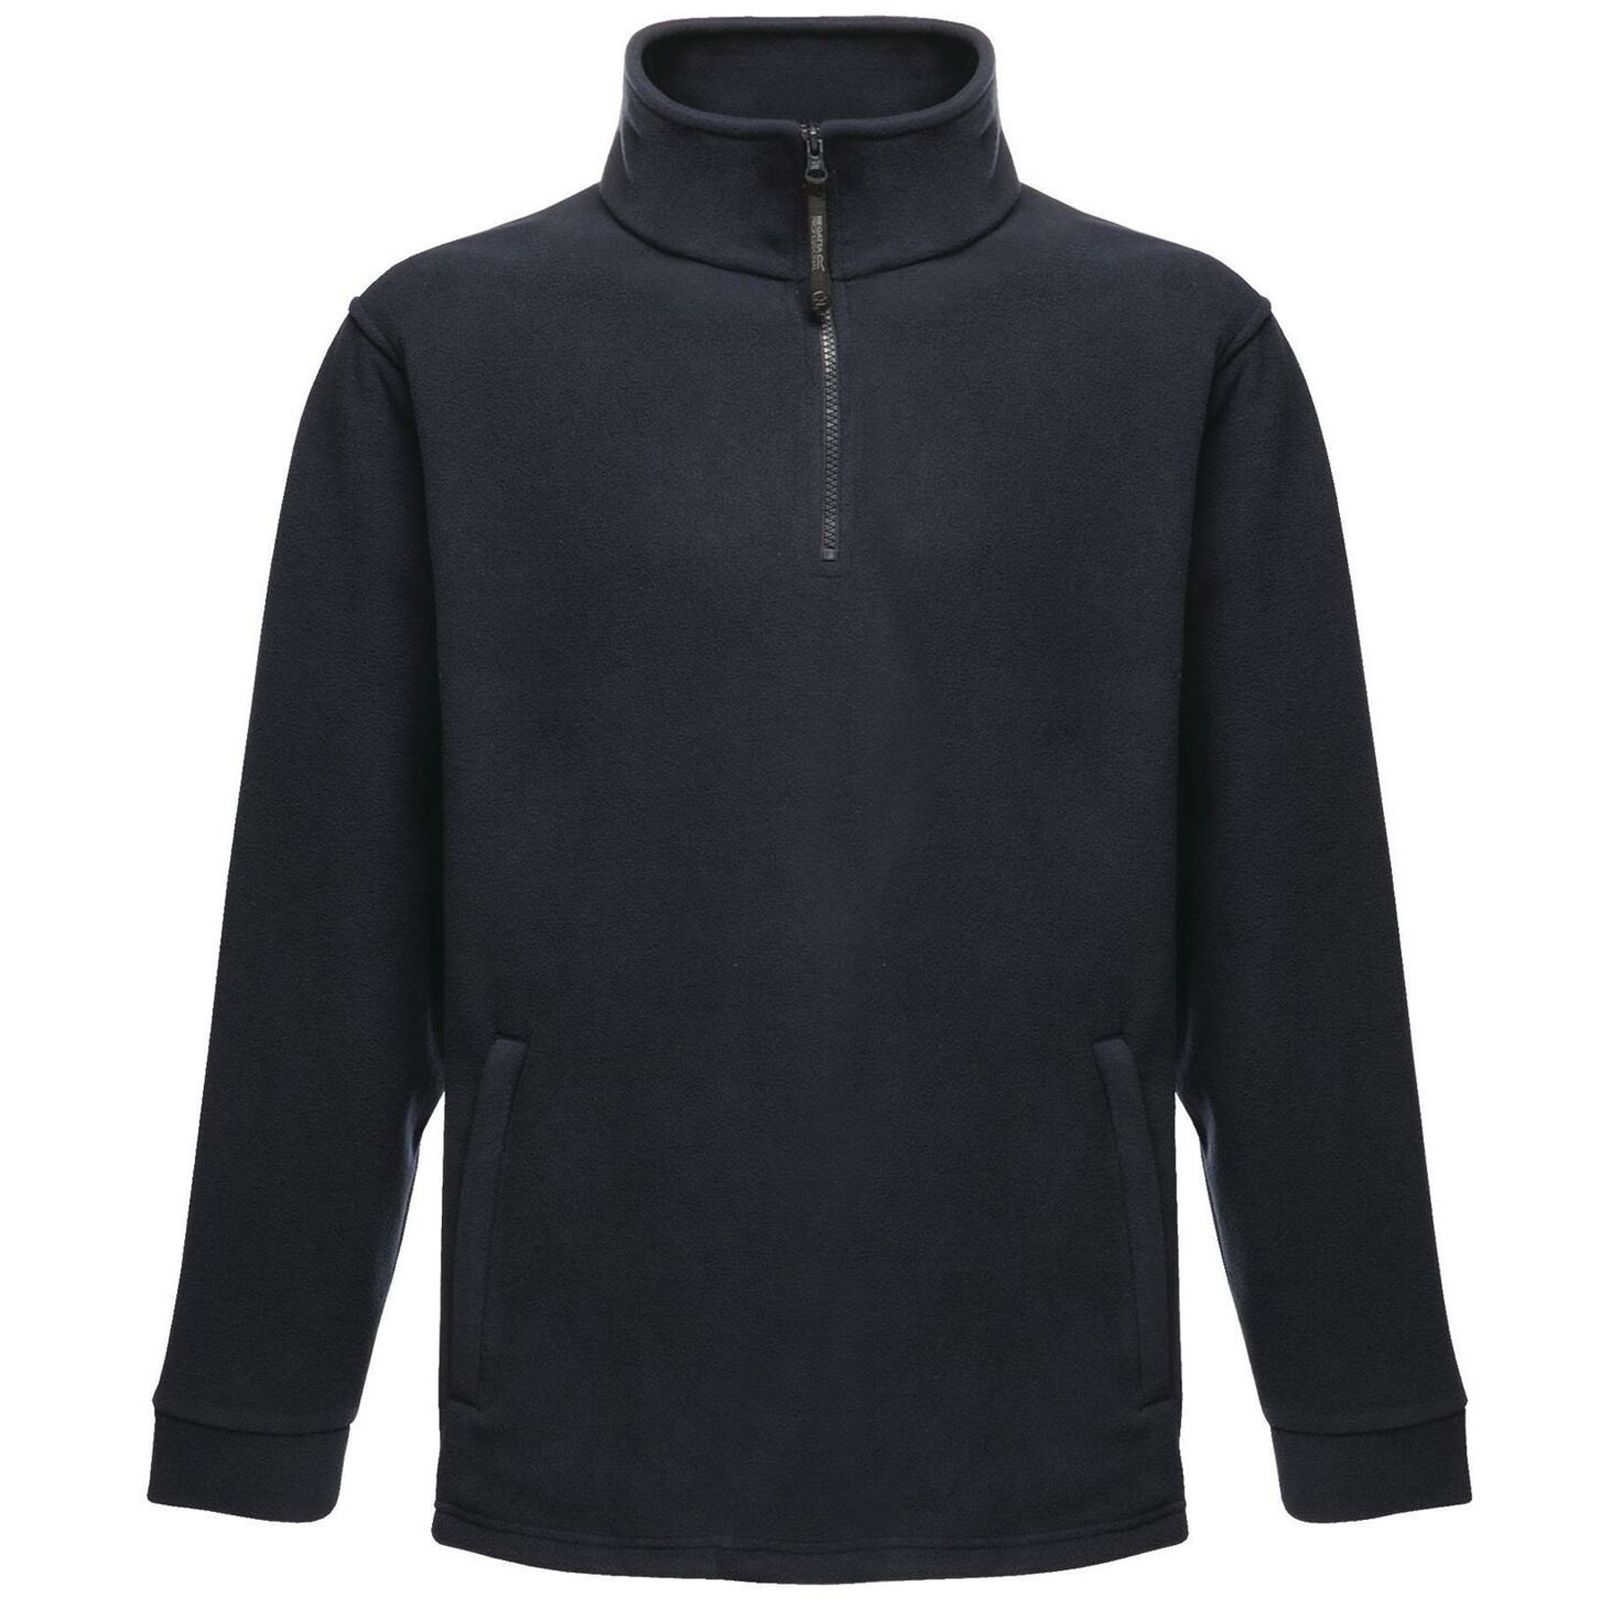 100% fleece. Unisex sweater. Half zip fleece. Fleece cuffs. Adjustable shockcord hem. 2 zipped lower pockets. Weight: 170g/m². Fabric: 170 series anti-pill Symmetry fleece. Regatta sizing (chest approx): XS (35-36in/89-91.5cm), S (37-38in/94-96.5cm), M (39-40in/99-101.5cm), L (41-42in/104-106.5cm), XL (43-44in/109-112cm), XXL (46-48in/117-122cm), XXXL (49-51in/124.5-129.5cm), XXXXL (52-54in/132-137cm), XXXXXL (55-57in/140-145cm).